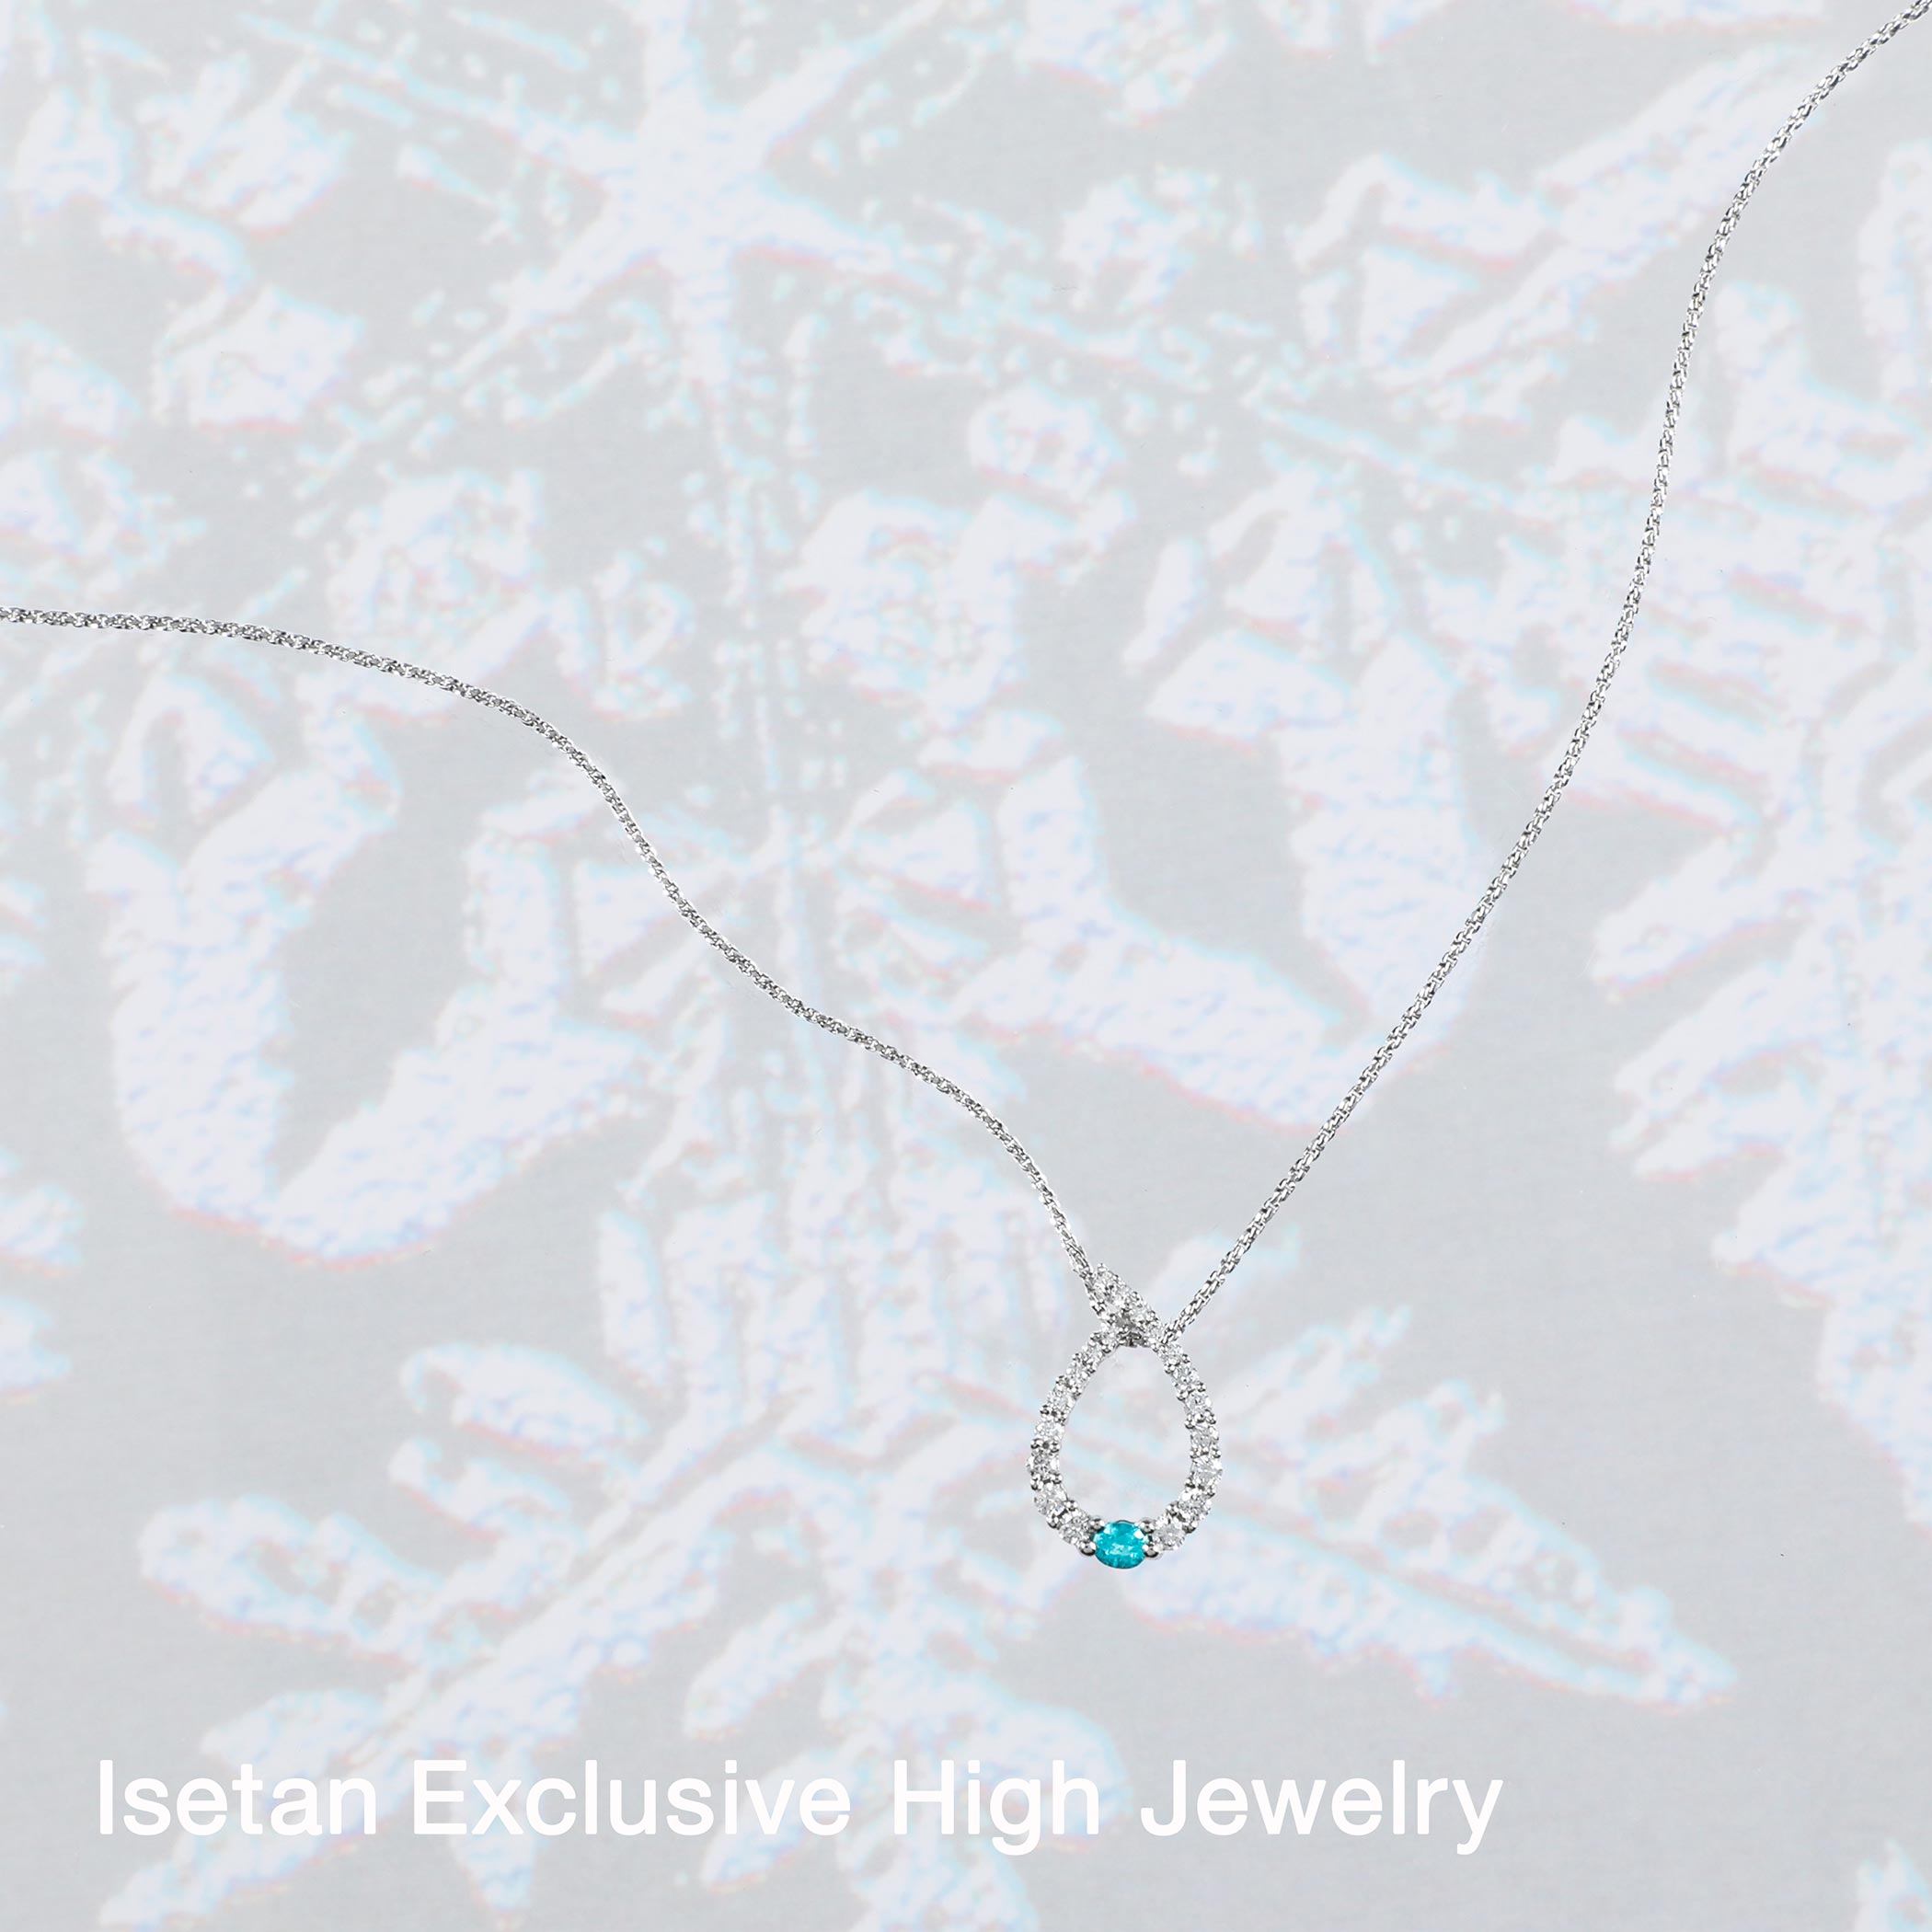 Isetan Exclusive High Jewelry